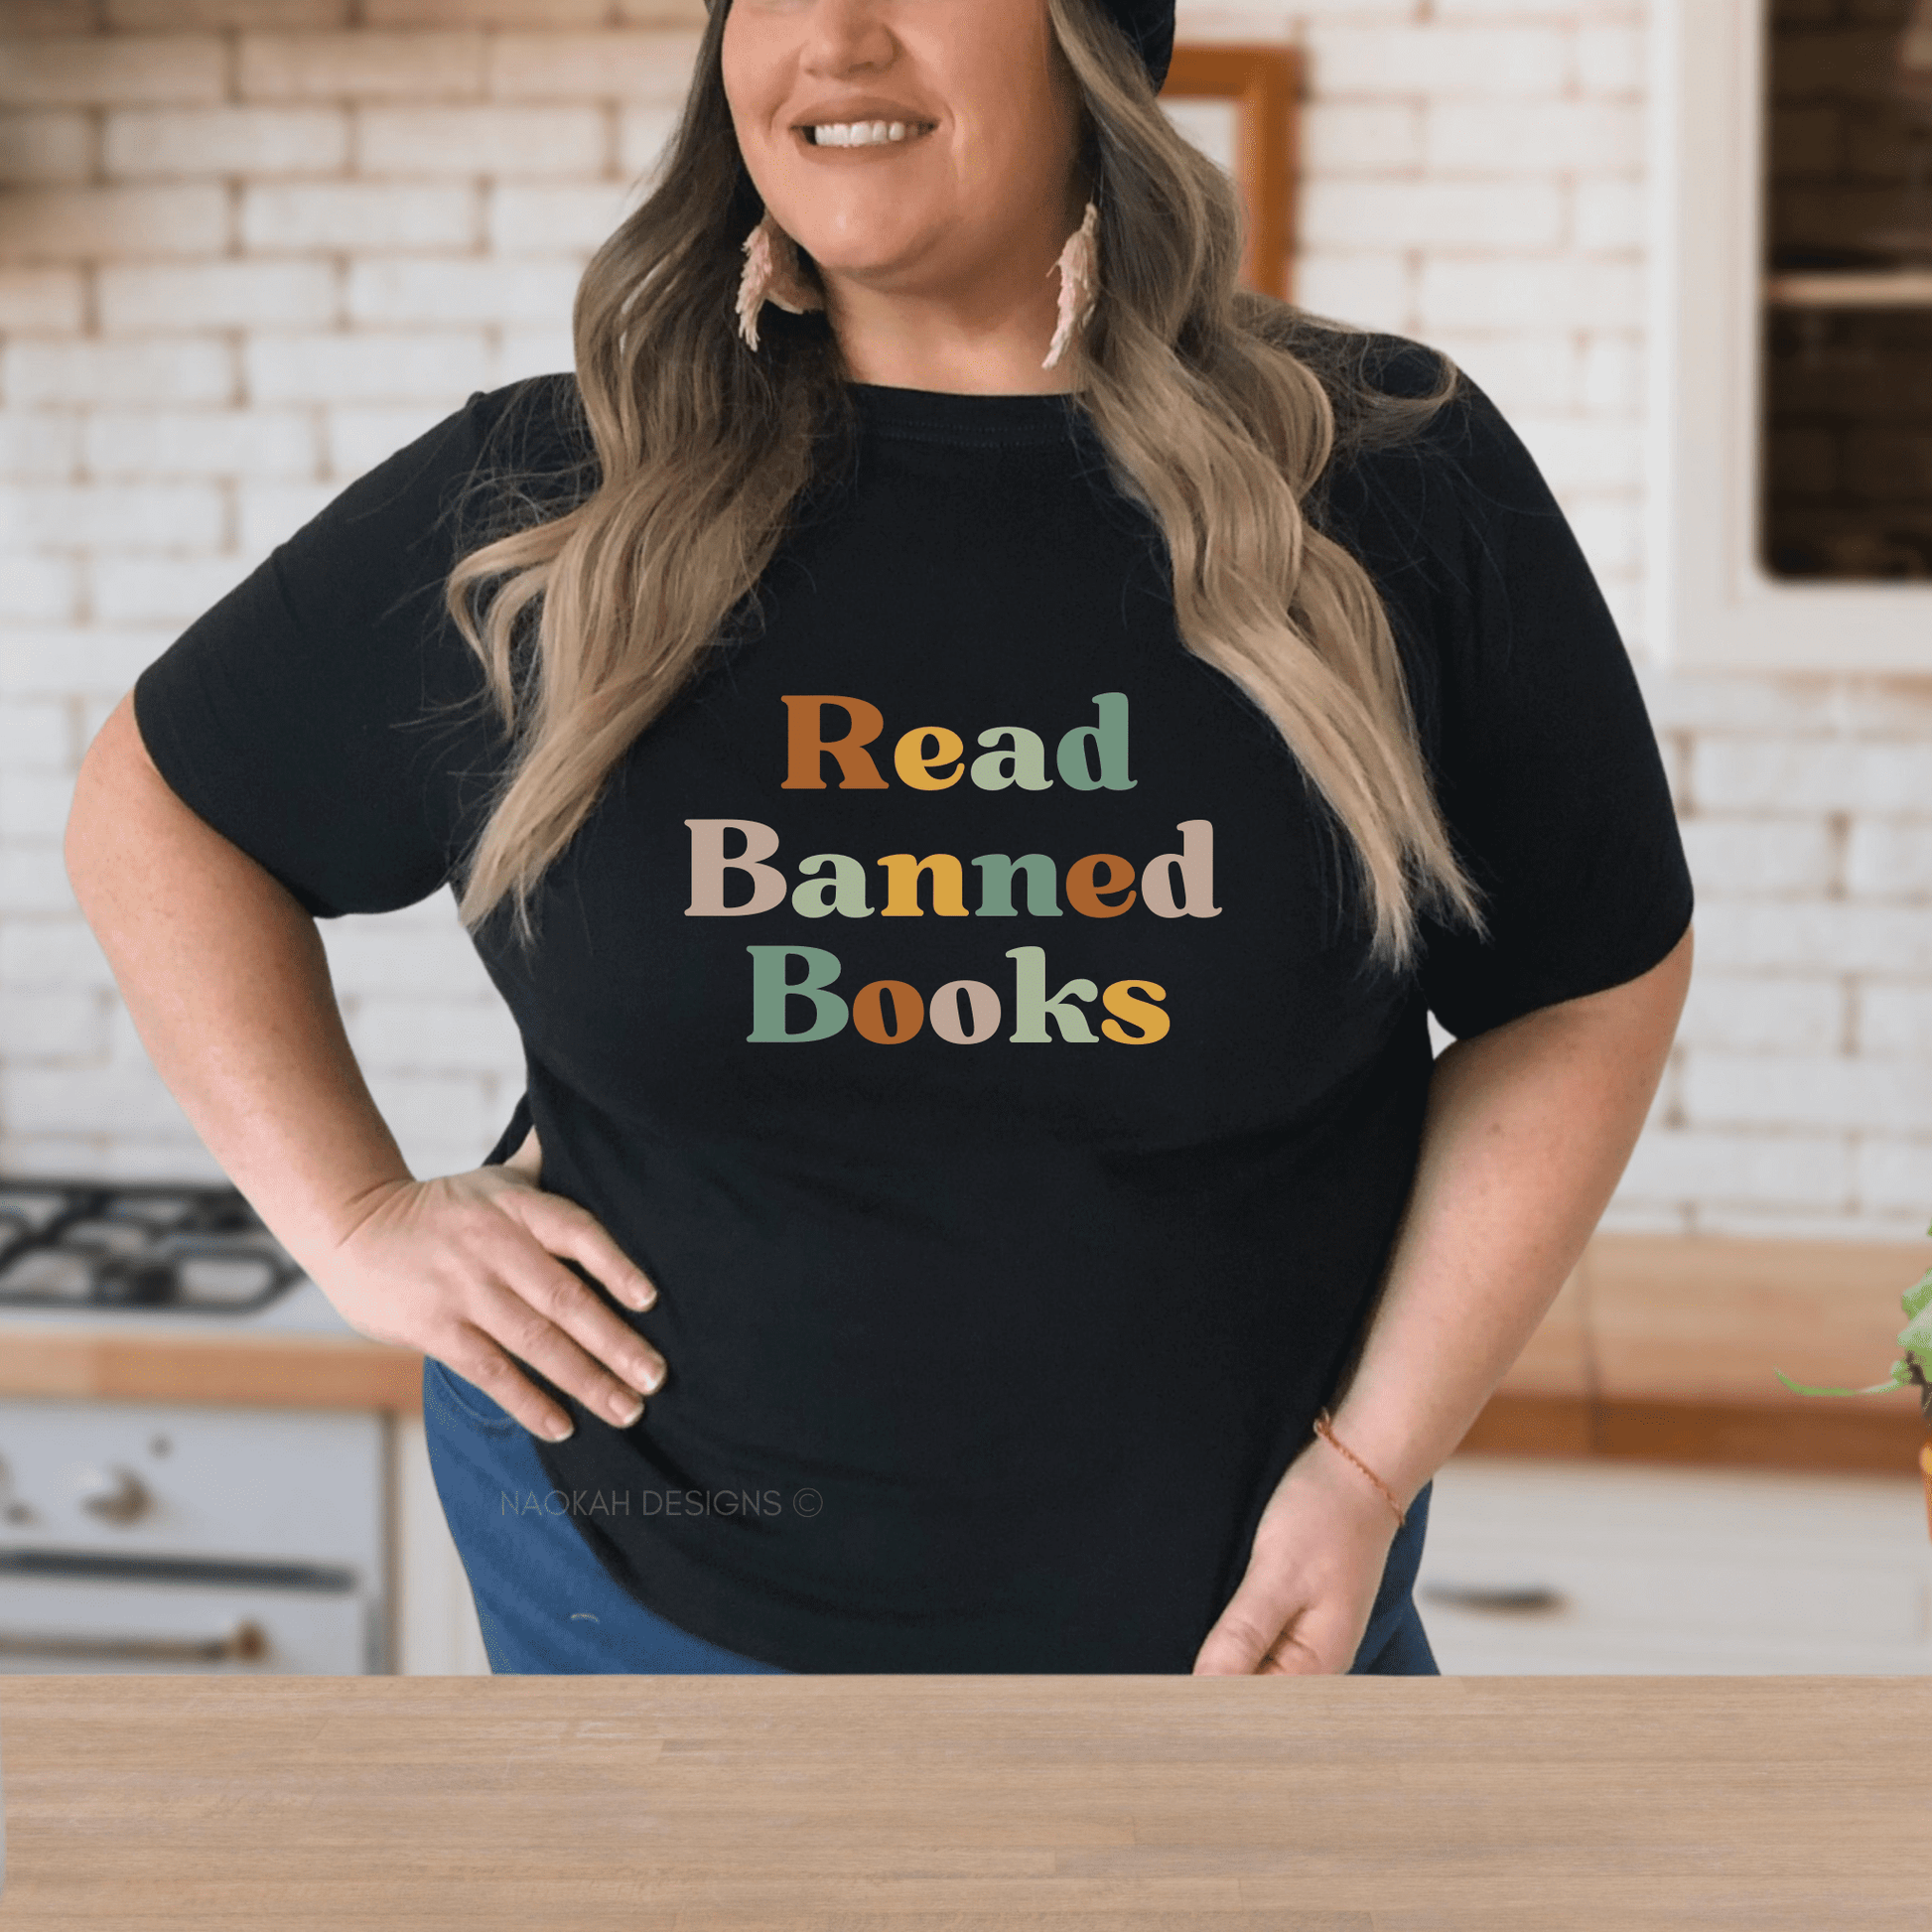  Read Banned Books Shirt, Librarian Shirt, Book Club Shirt, Bookish Shirt, Try Reading Book Instead Of Banning Them, Literature Shirt